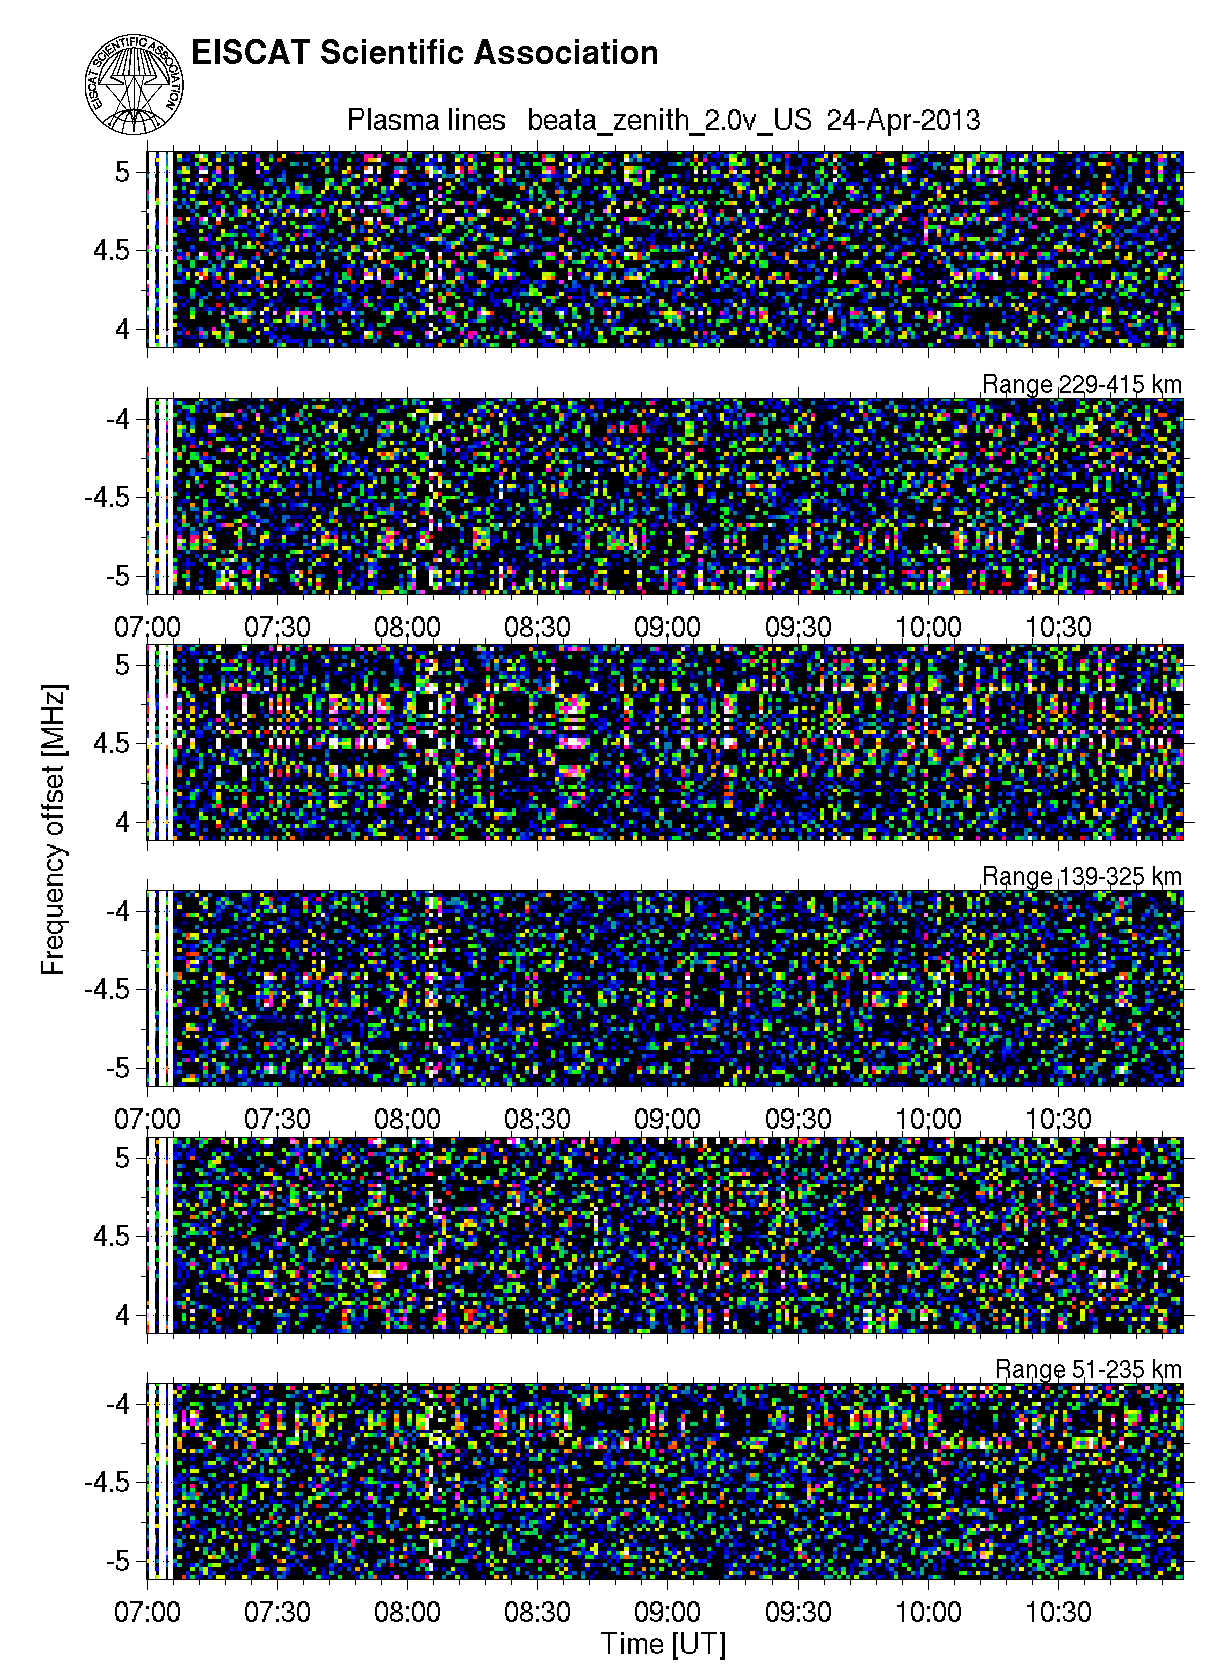 plots/2013-04-24_beata1_60_V_plasmaline.png